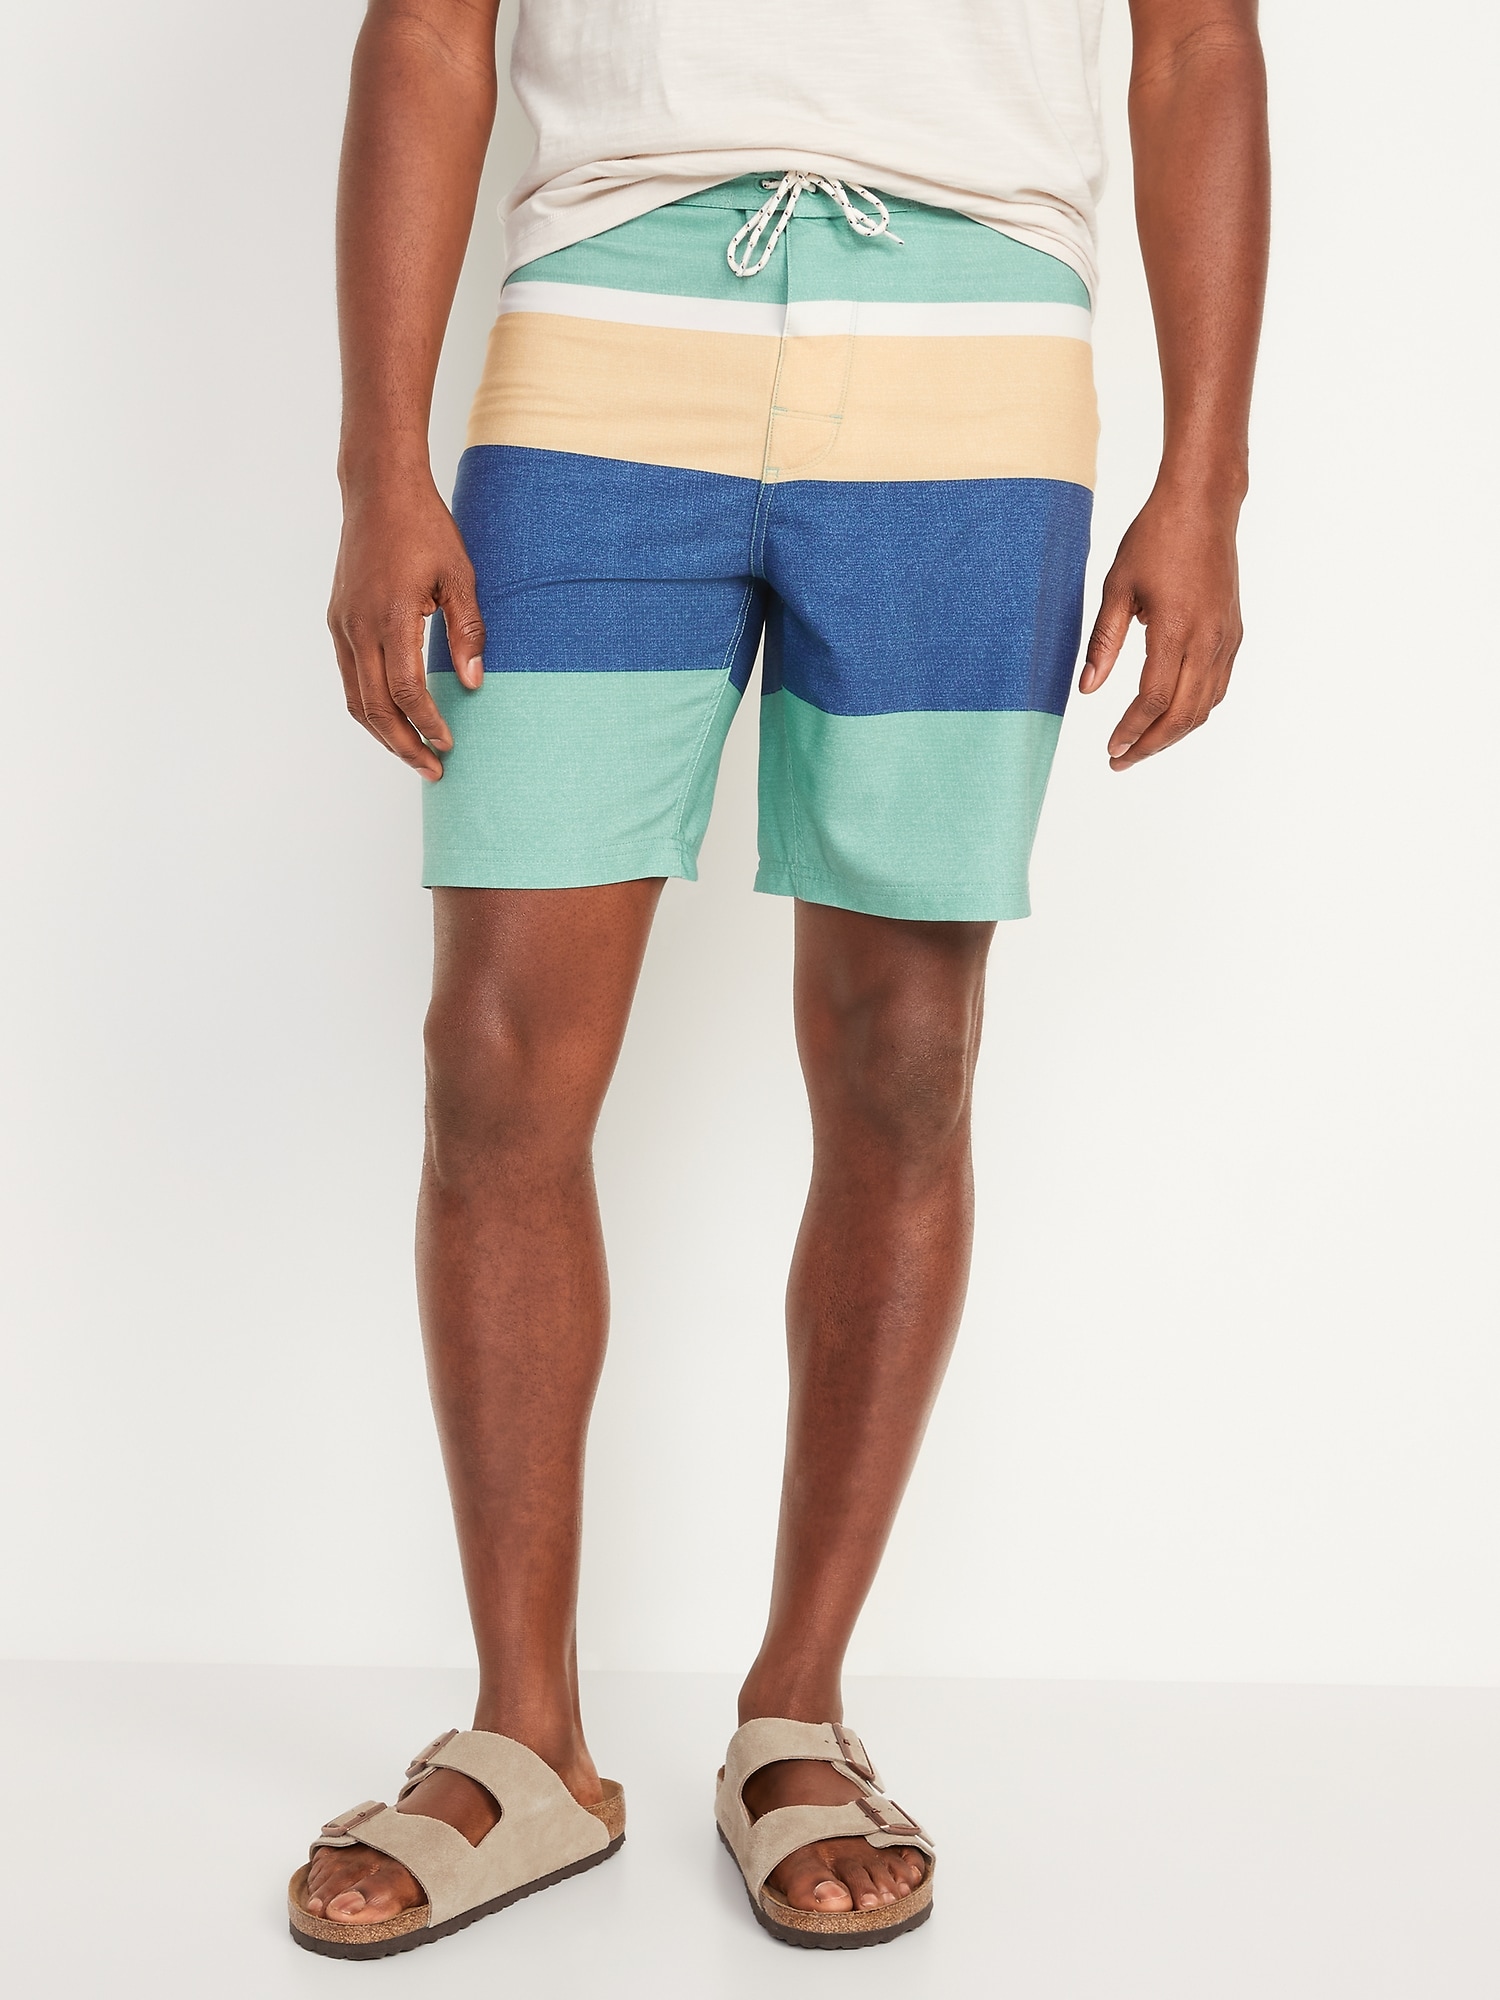 Patterned Built-In Flex Board Shorts for Men -- 8-inch inseam | Old Navy